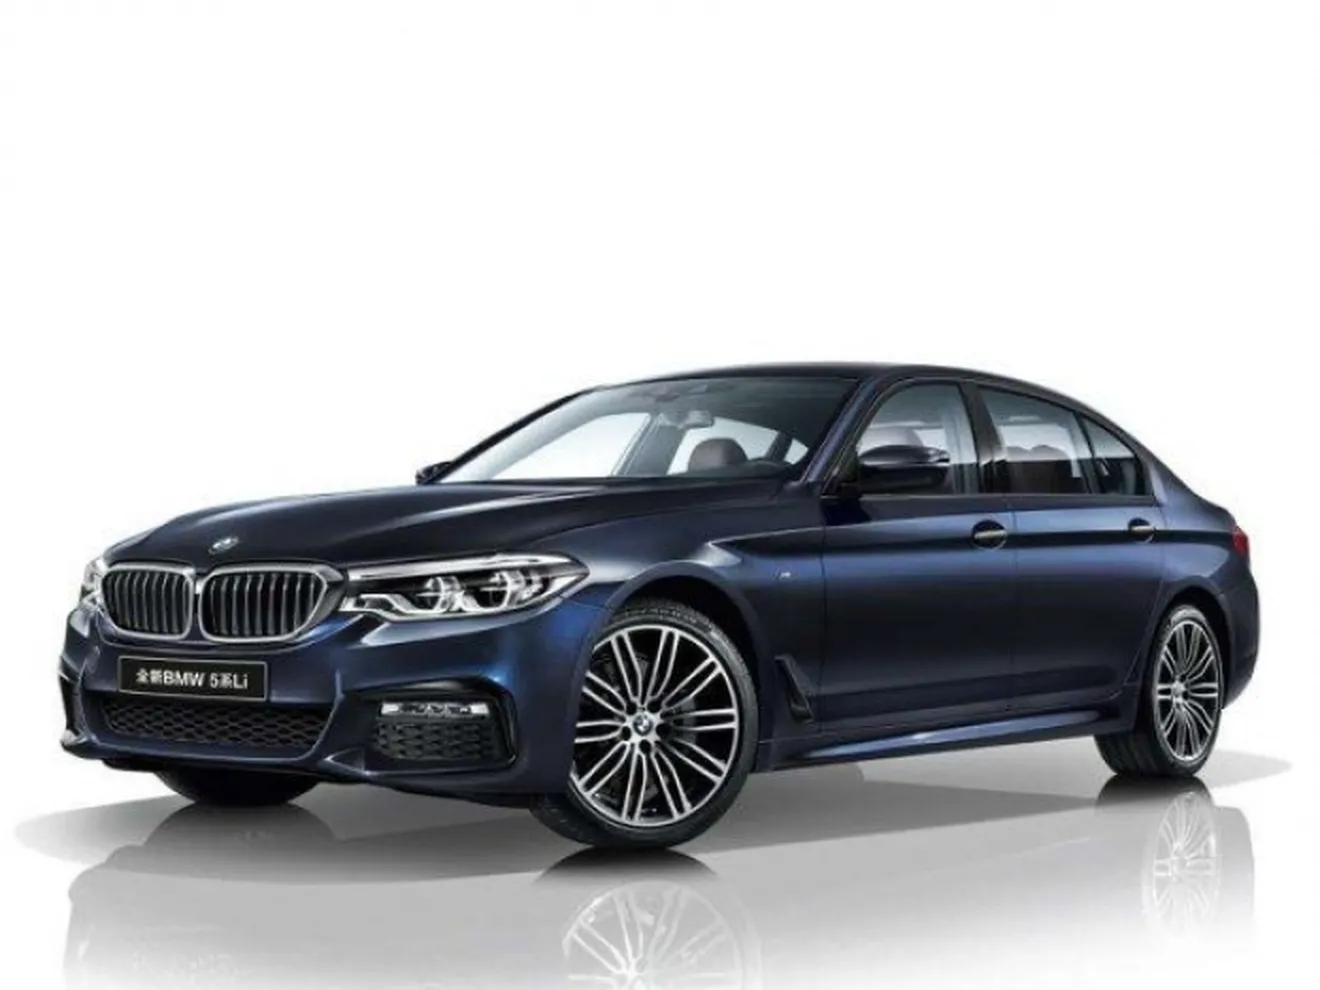 BMW Serie 5 Li: nueva variante de batalla extendida solo para China